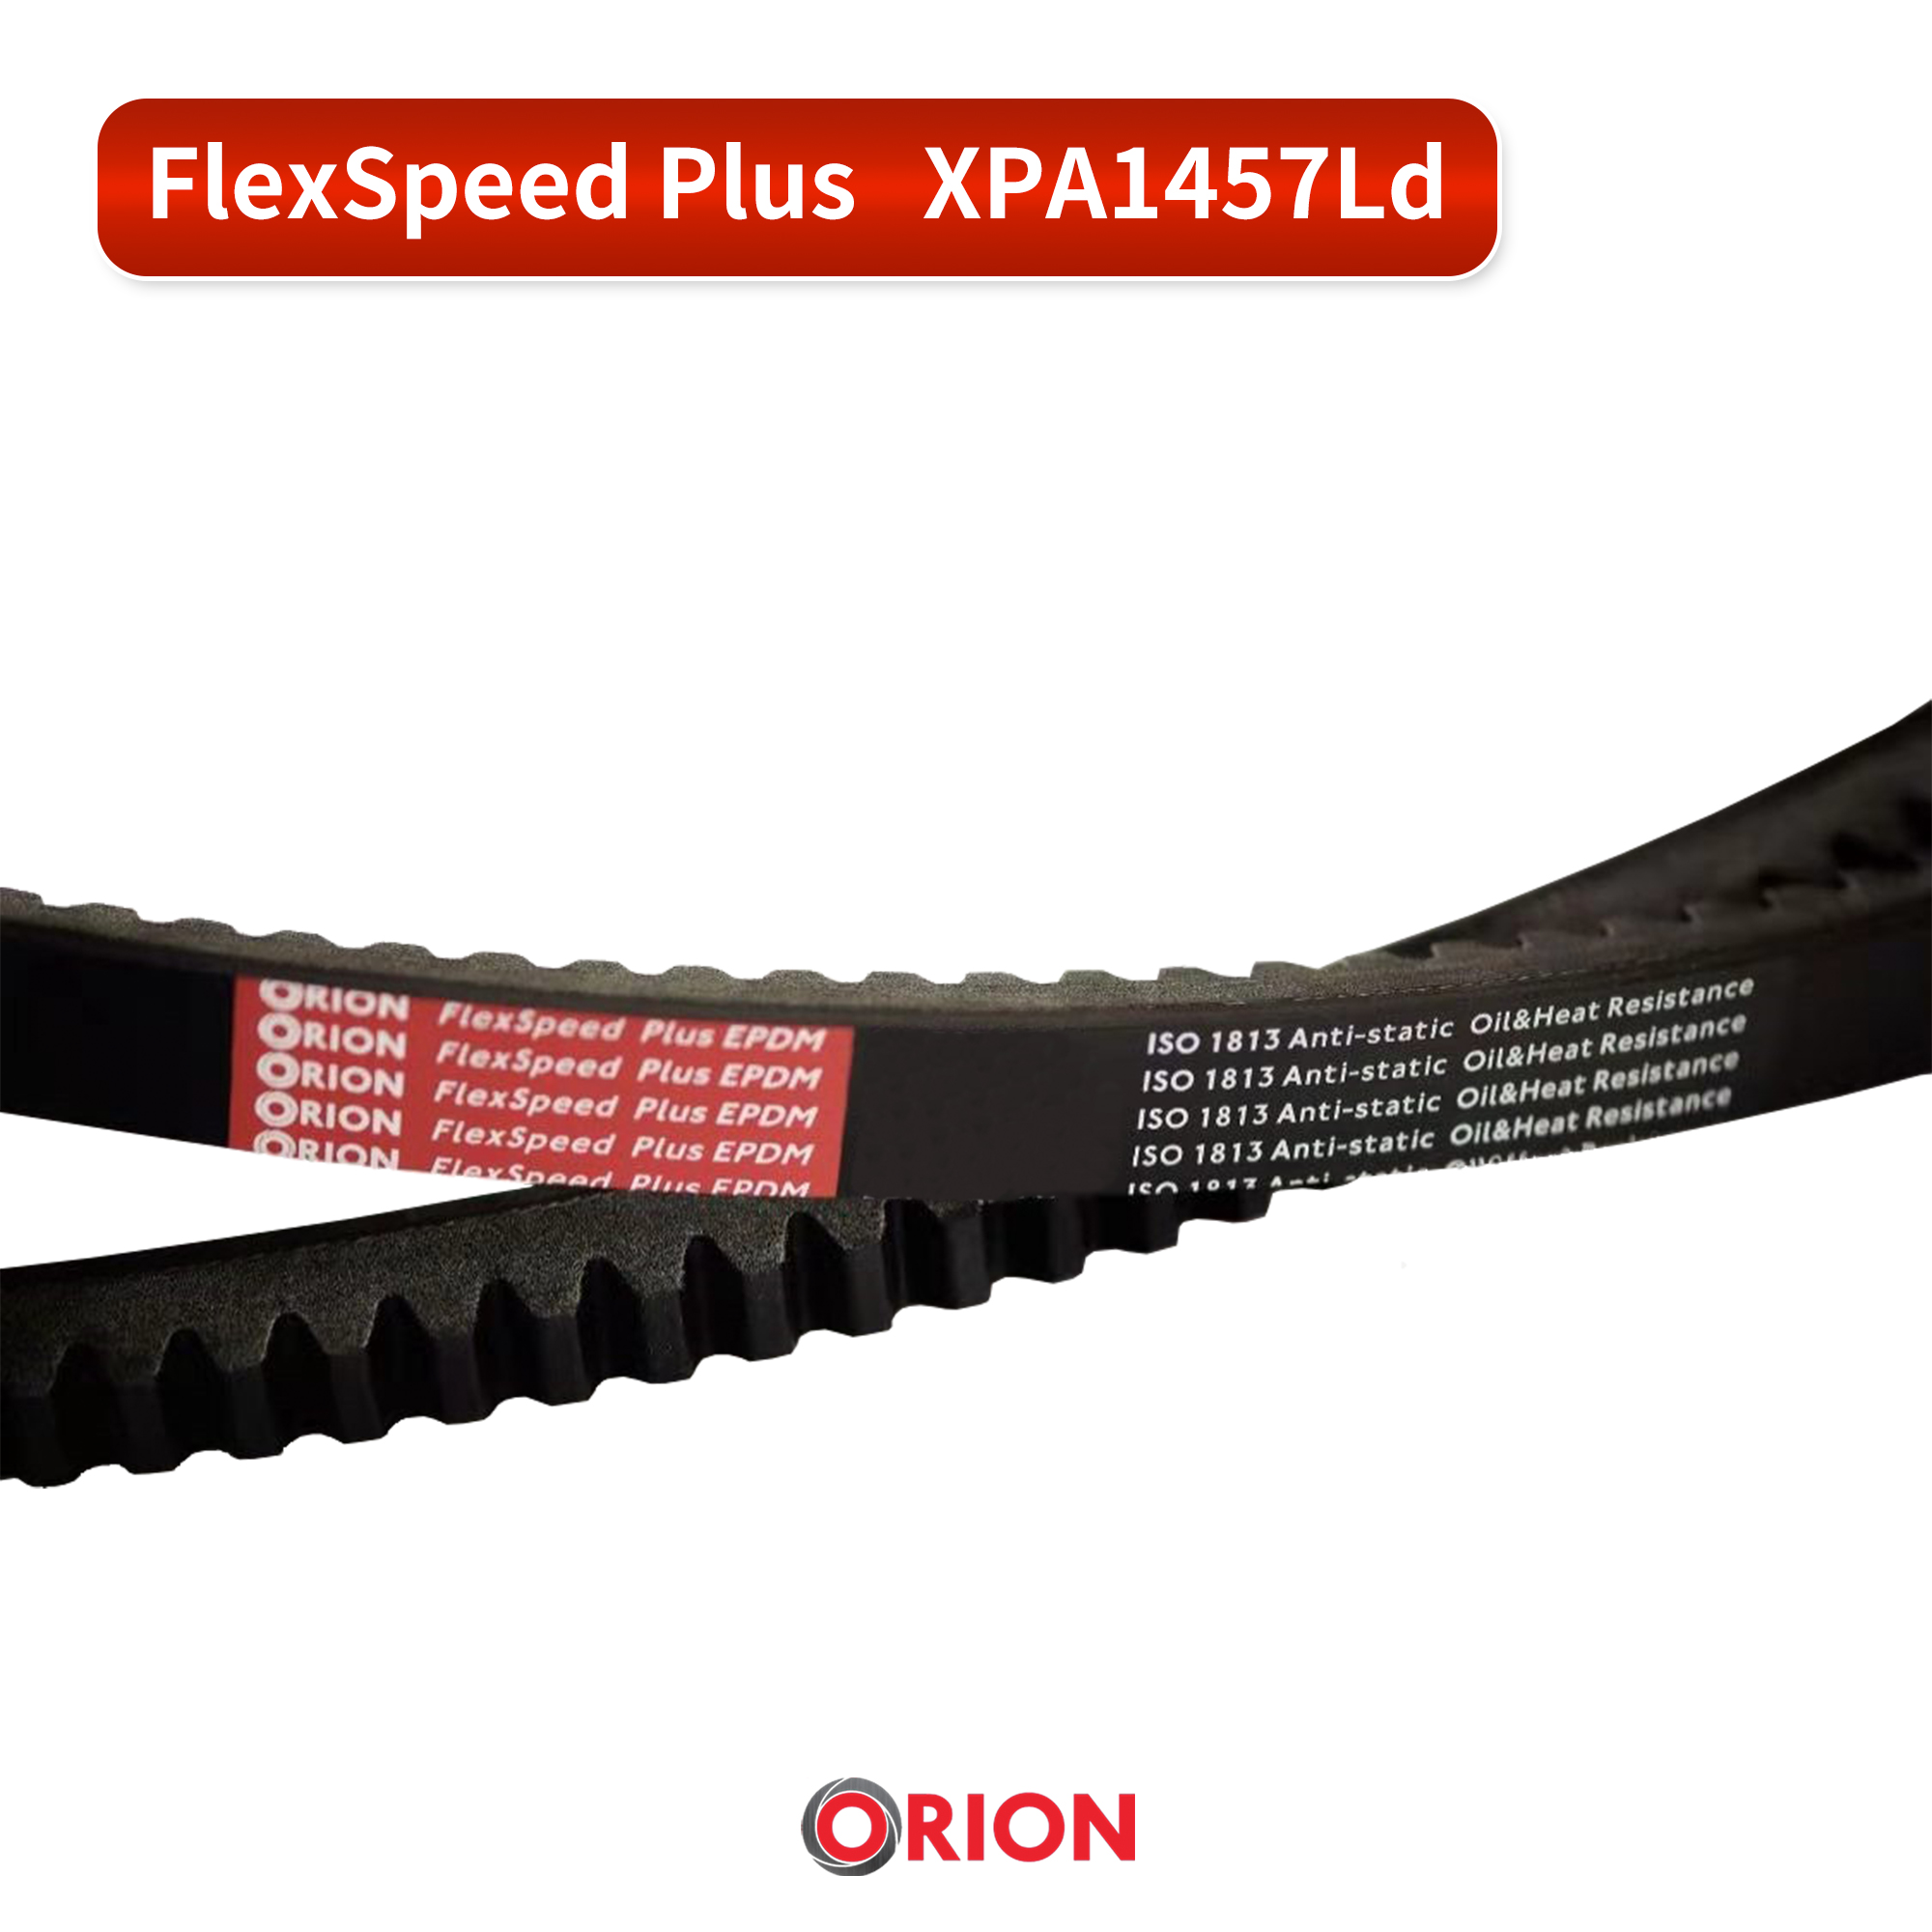 ORION FlexSpeed Plus XPA1457 Ld （红标）